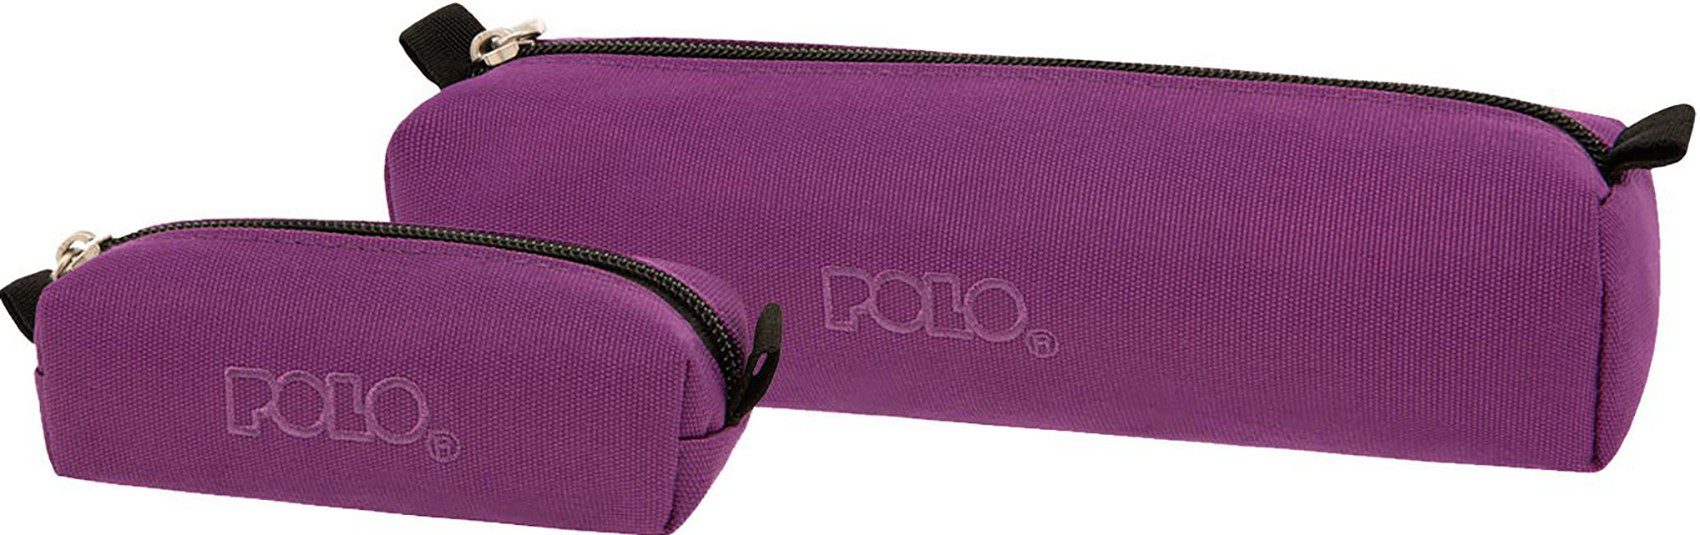 Polo Κασετινα Wallet Cord Βιολετι 2023